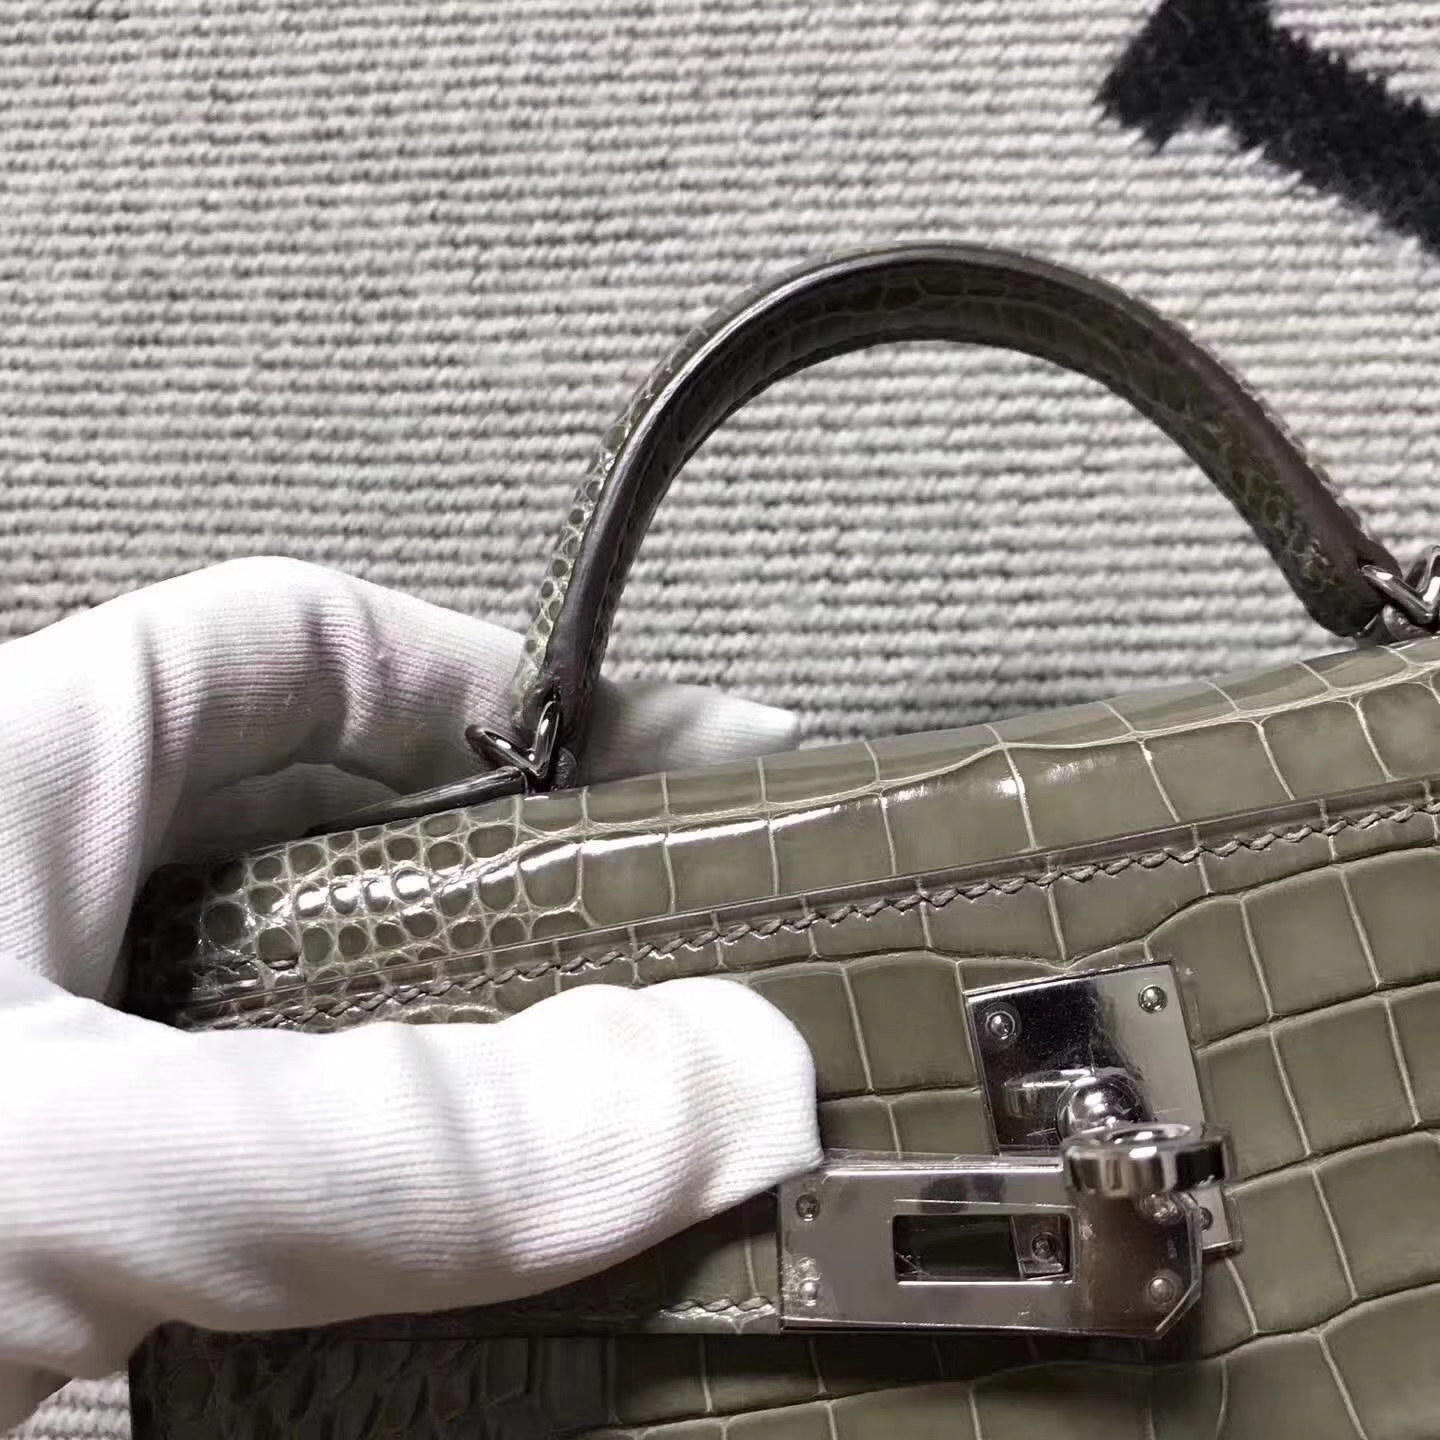 Discount Hermes Etoupe Grey Crocodile Shiny Minikelly-2 Clutch Bag